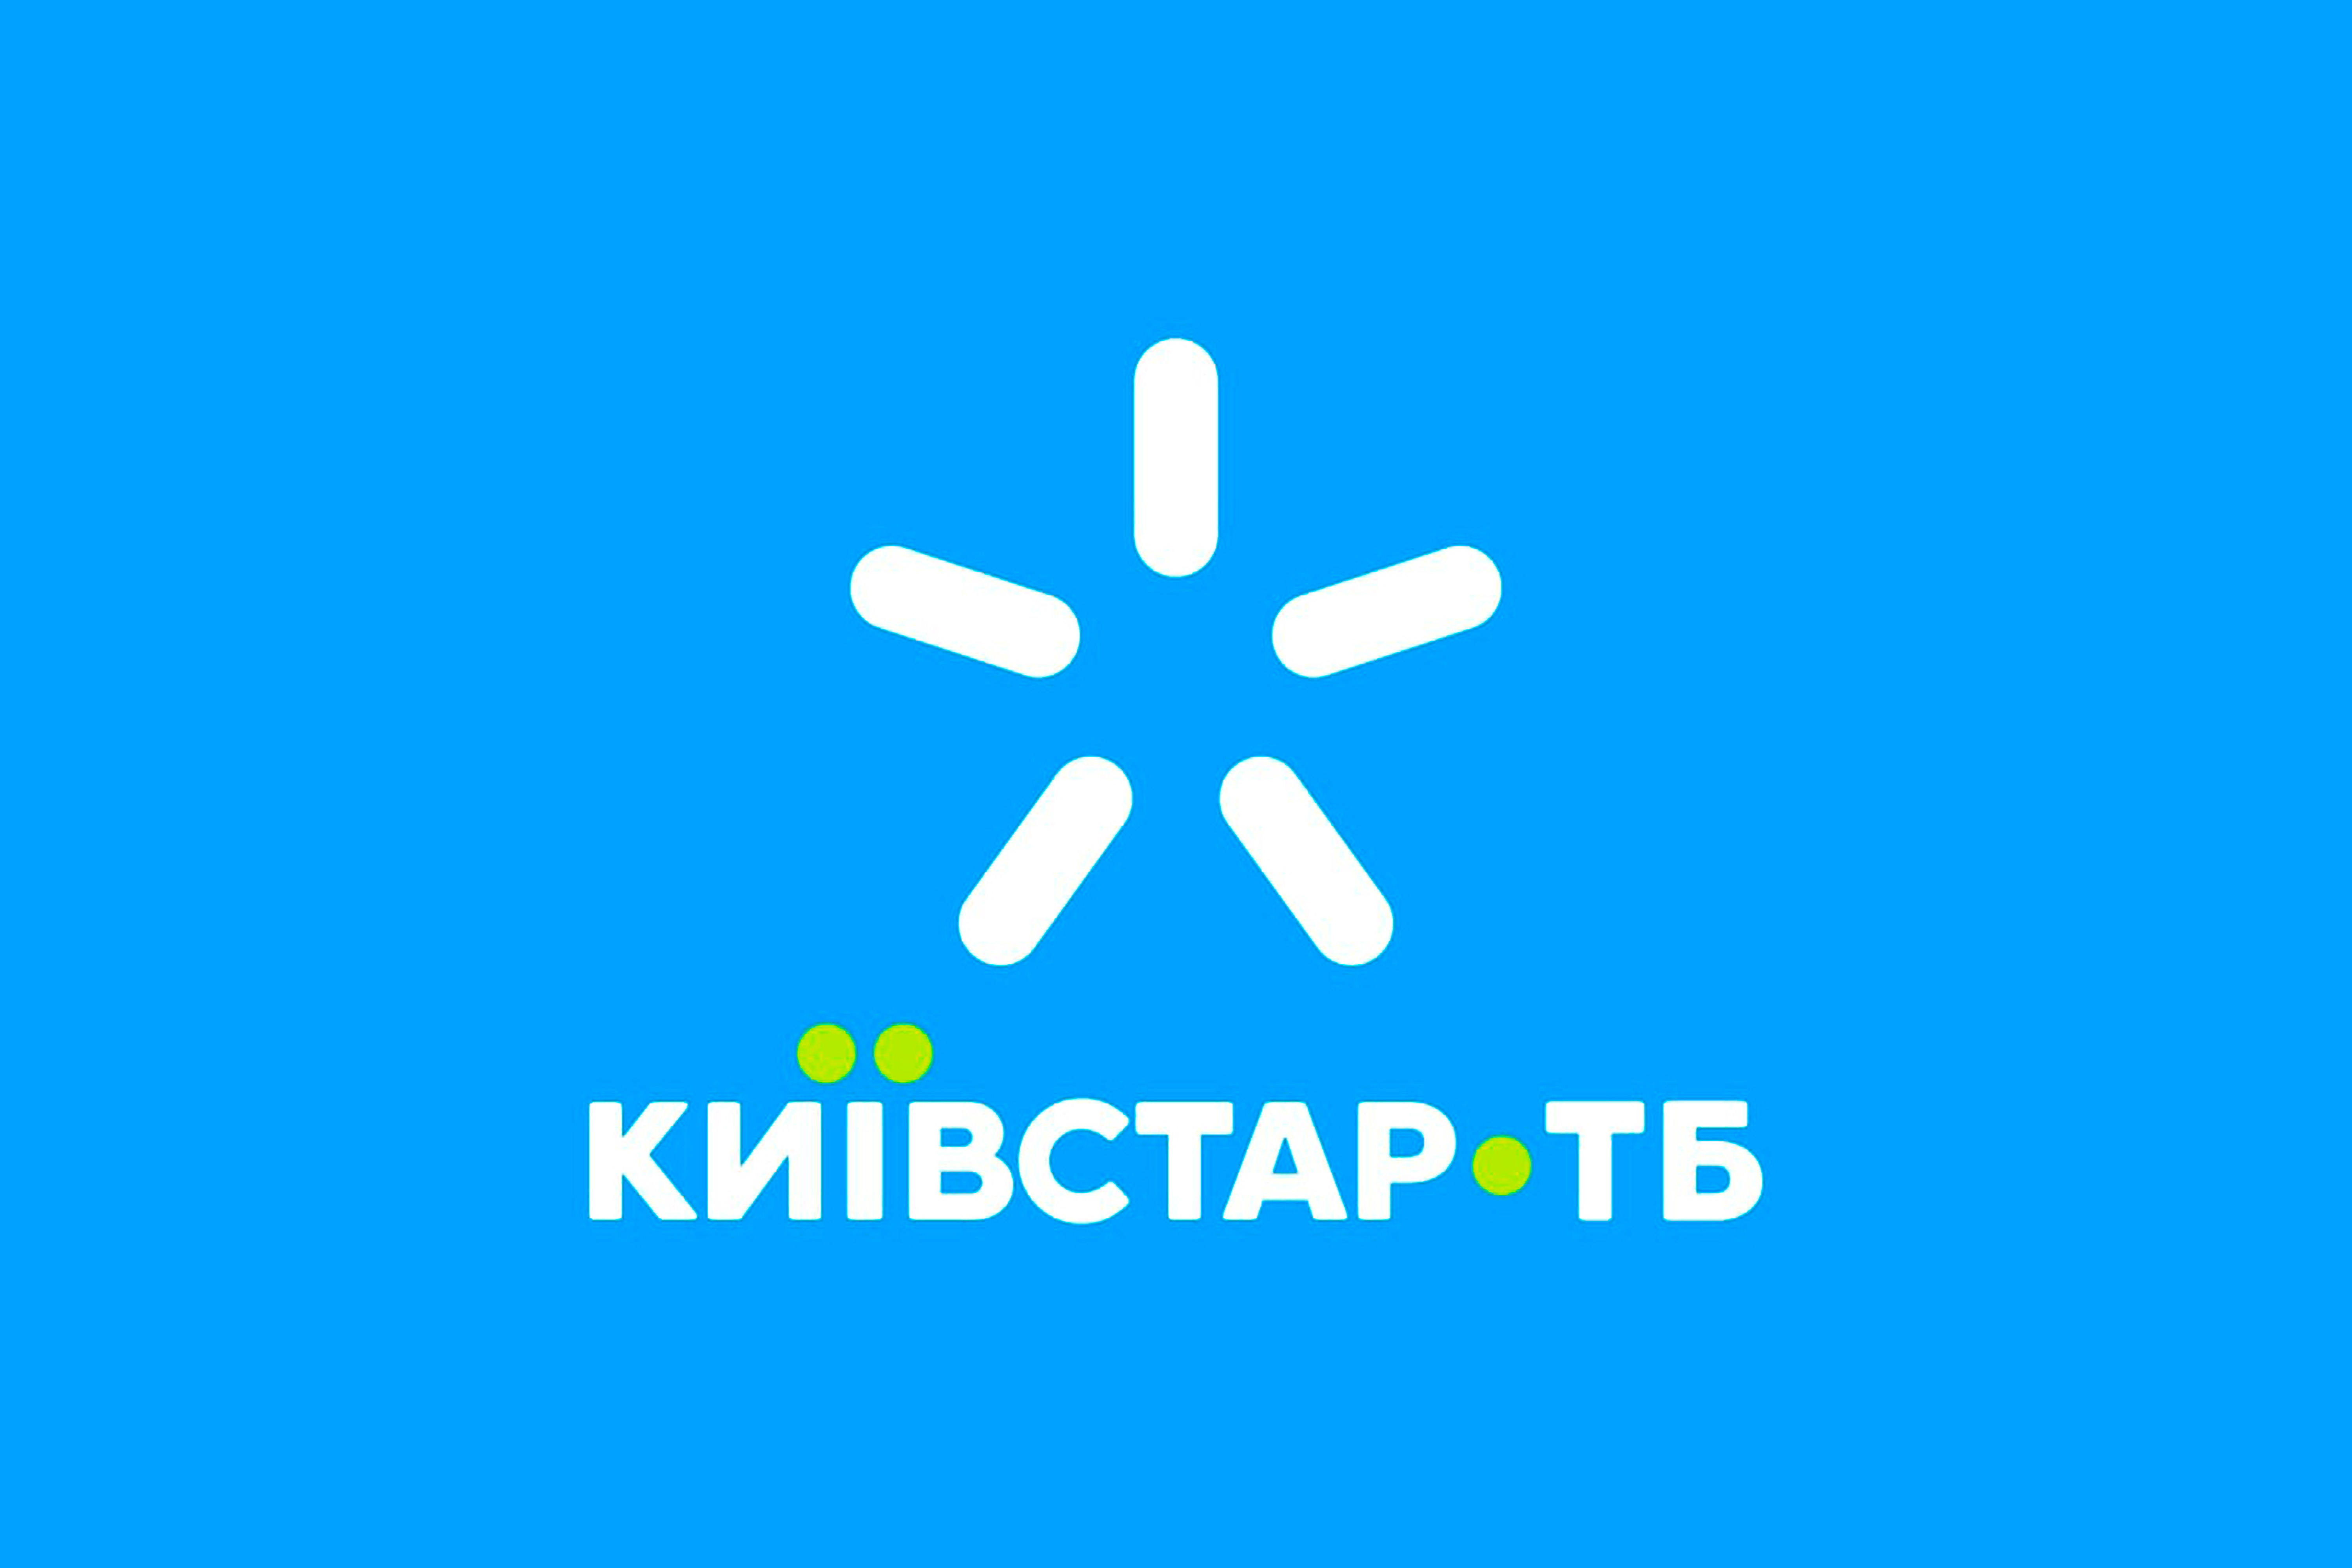 Kyivstar TV